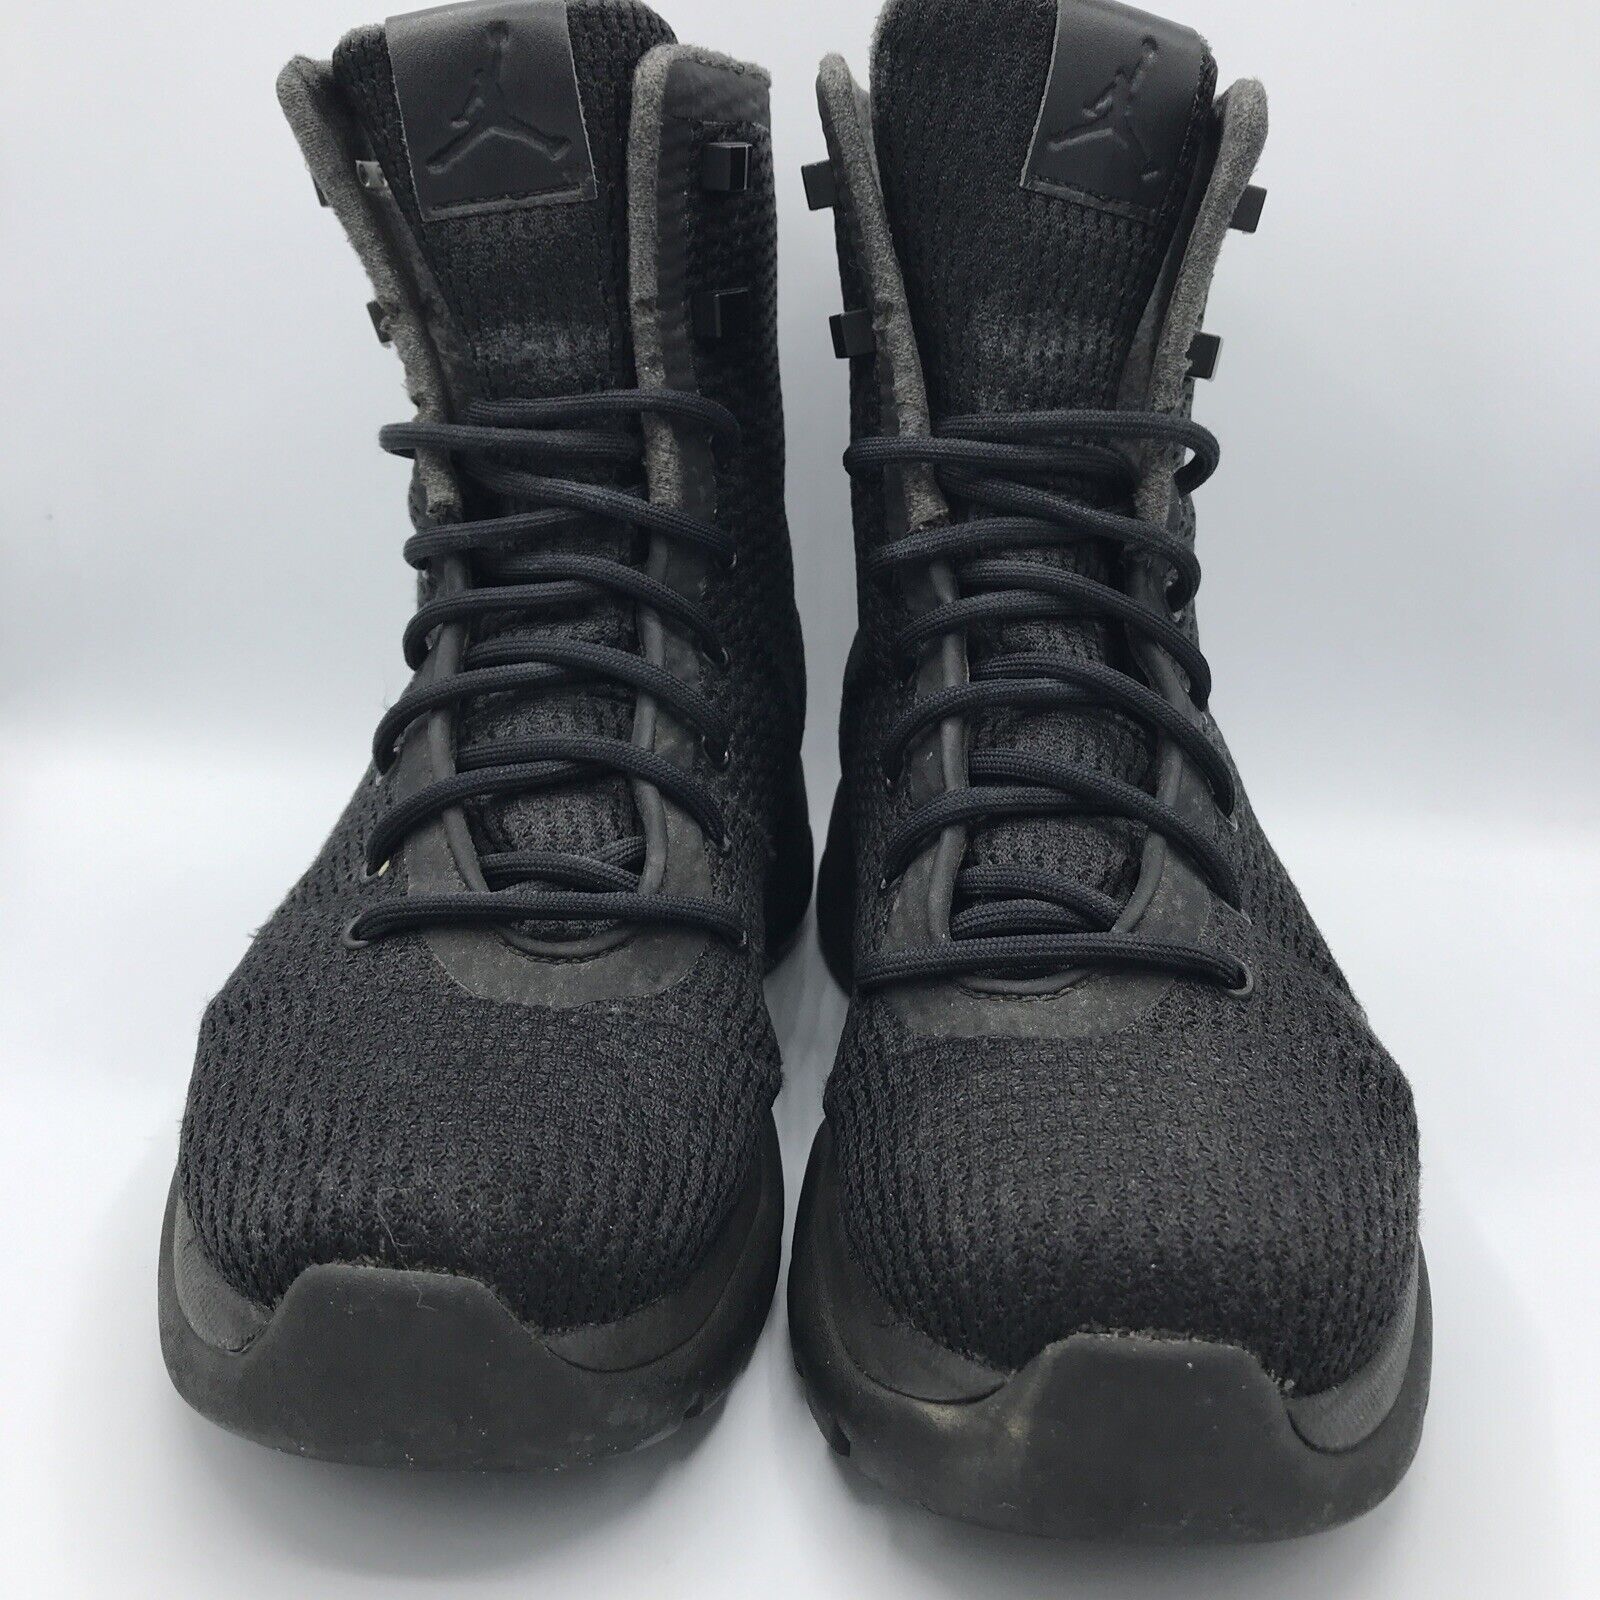 black jordan future boots